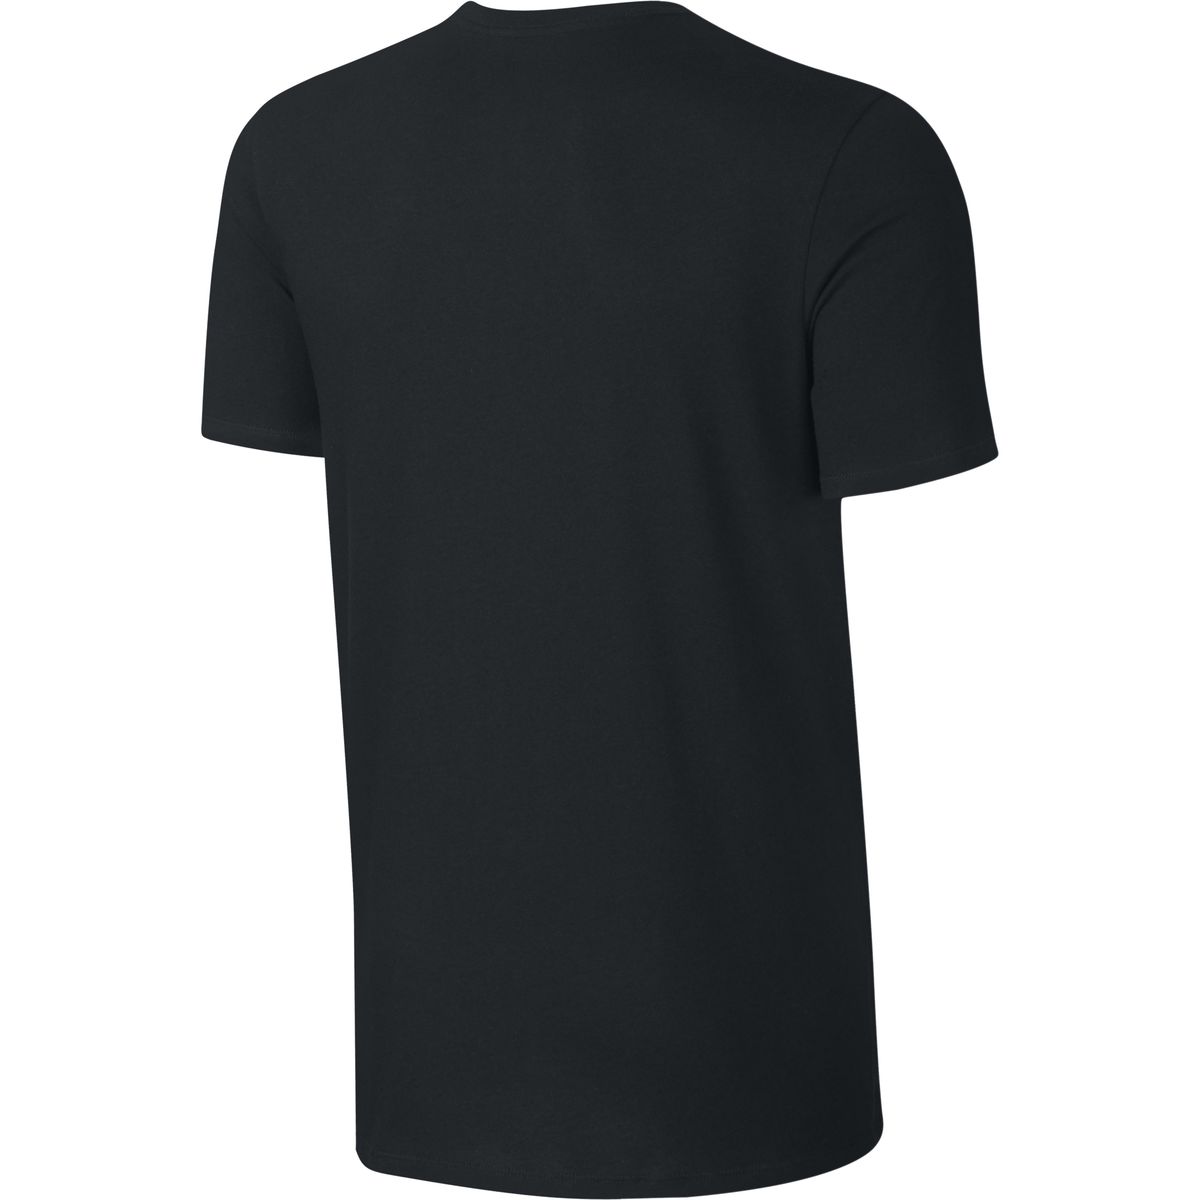 Nike Slash T-Shirt - Men's - Clothing